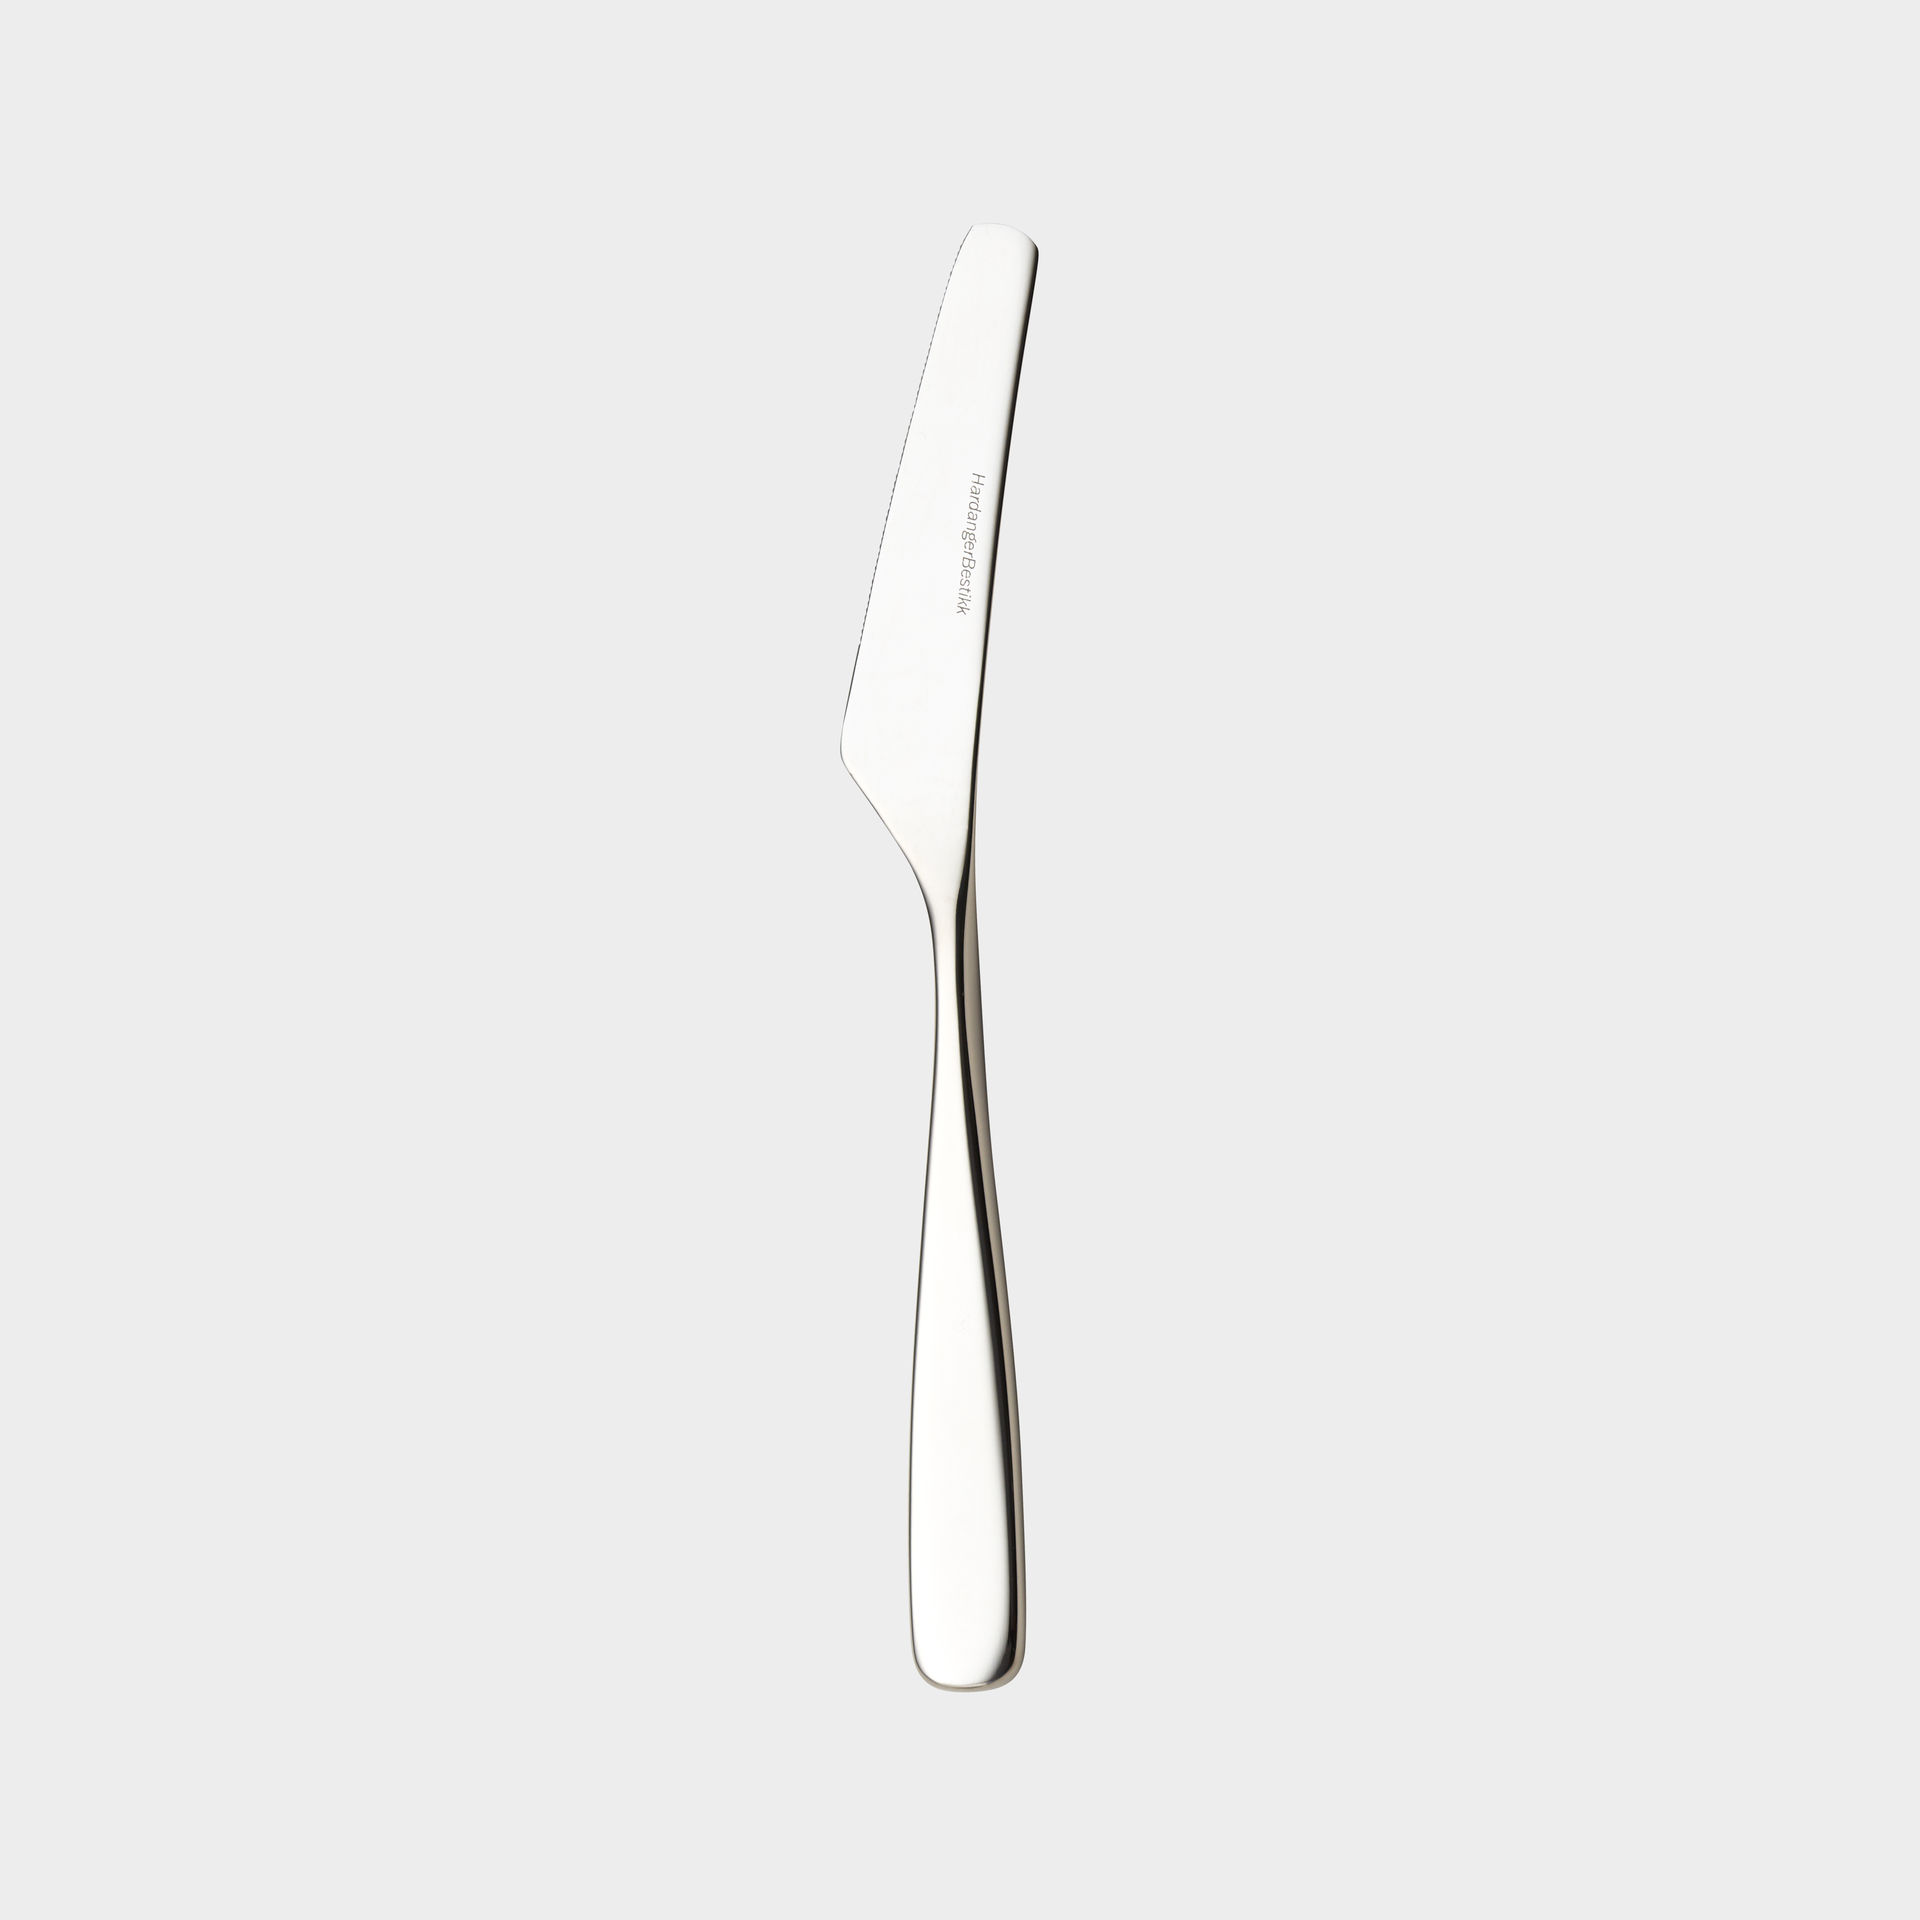 Tuva appetizer knife product image